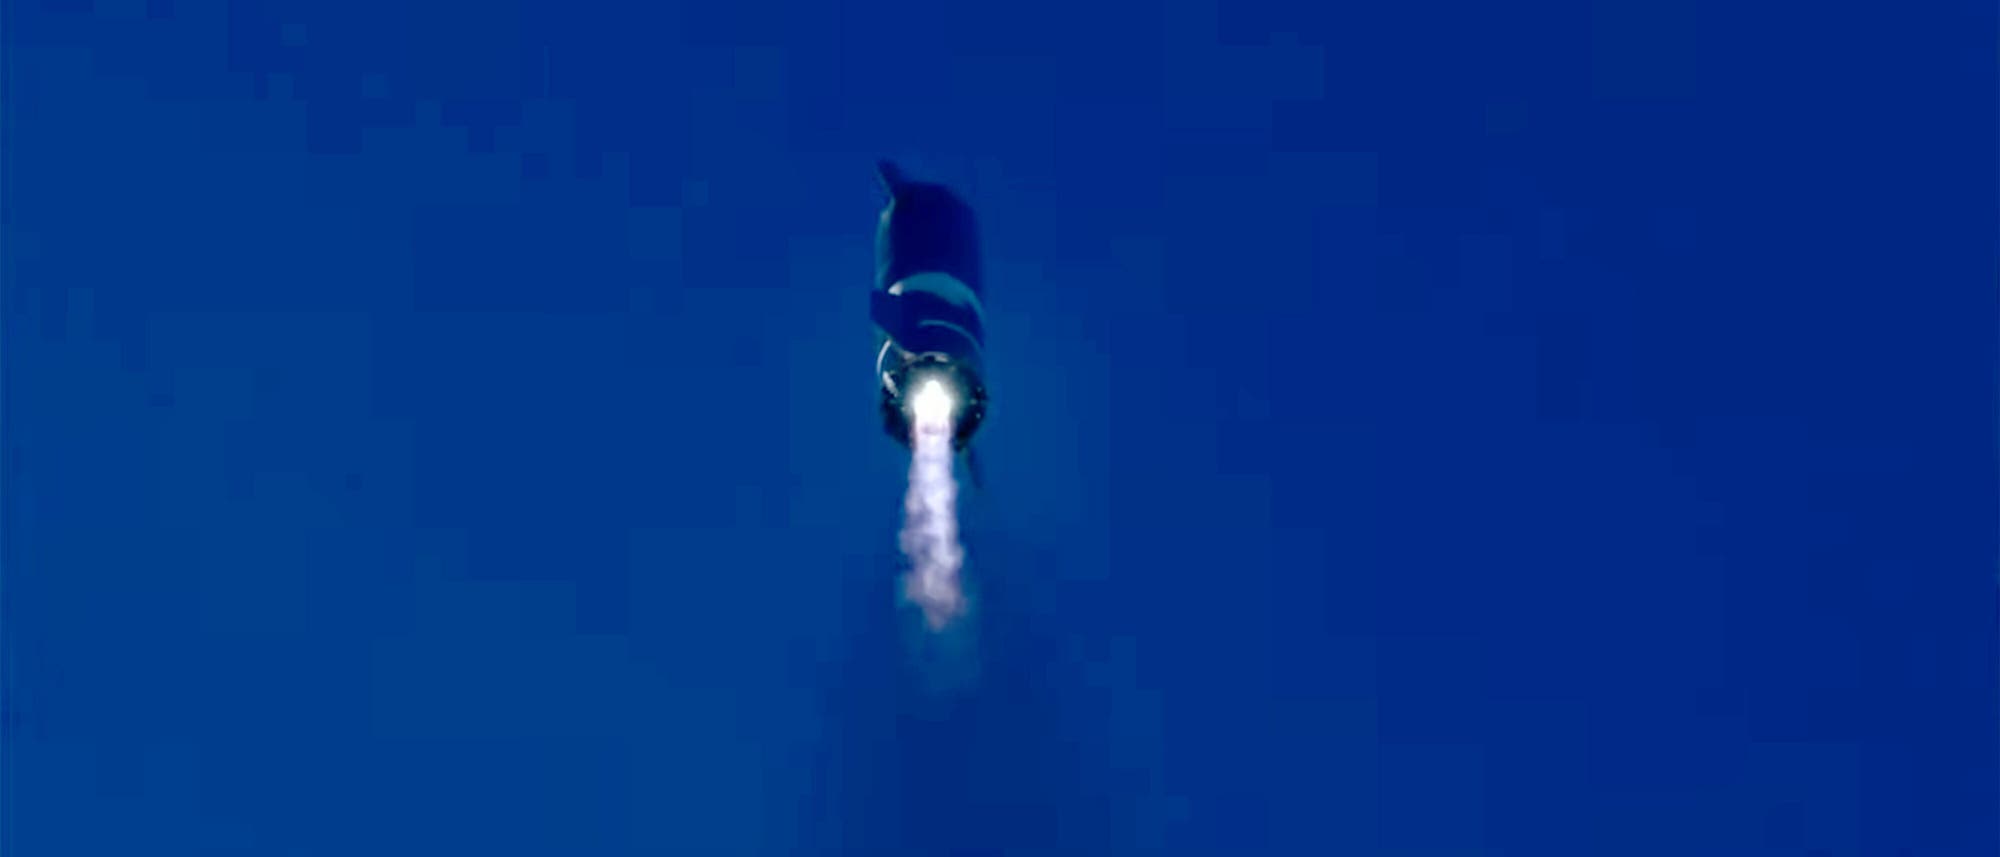 Starship 8 beim Testflug am 9. Dezember 2020